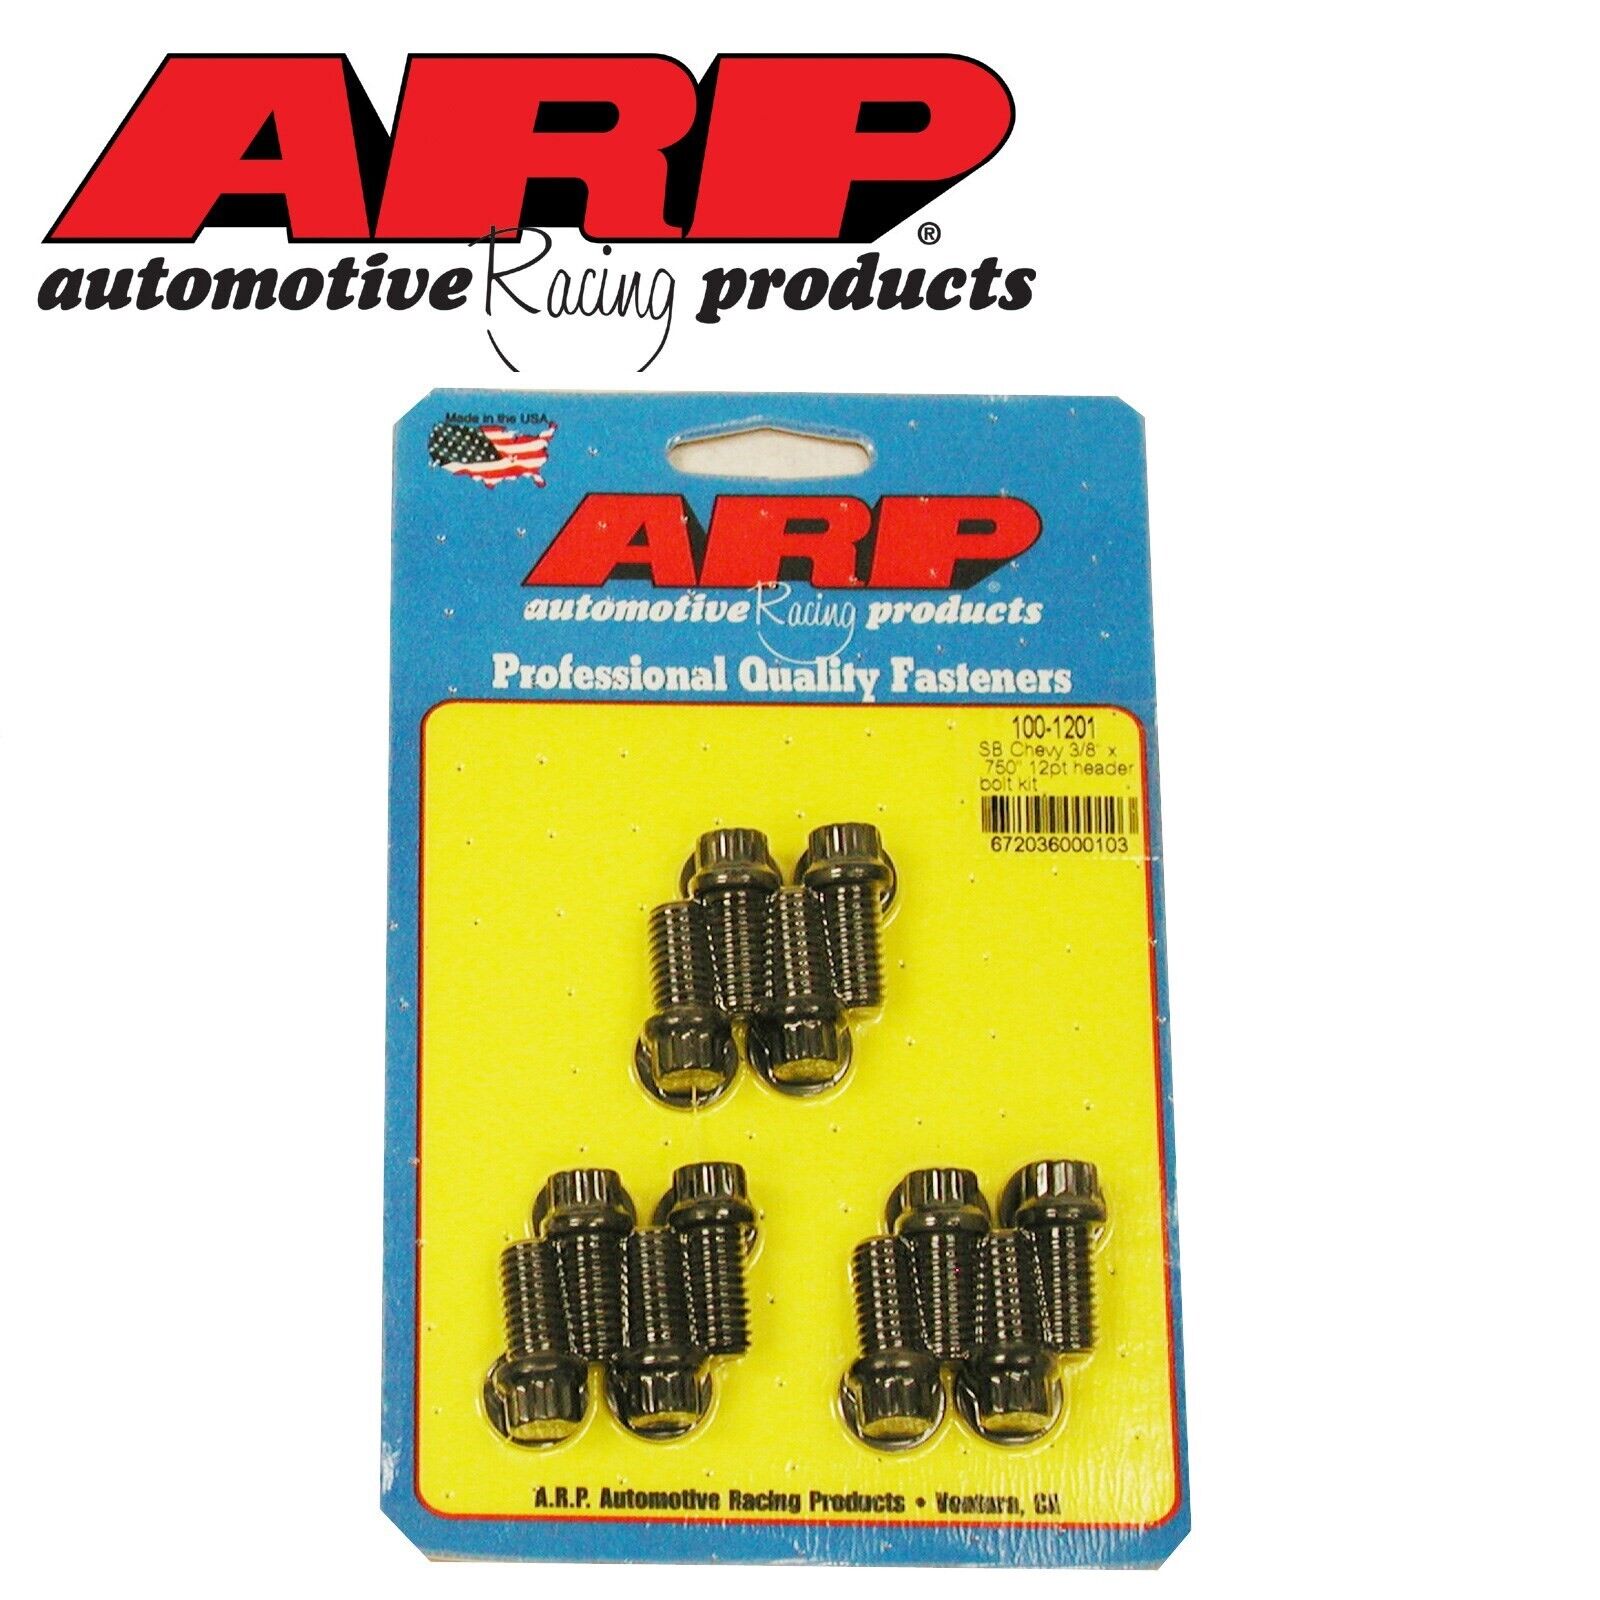 ARP 12 Point Header Bolt Set Fits sb Chevy 400 350 327 305 283 Engines #100-1201